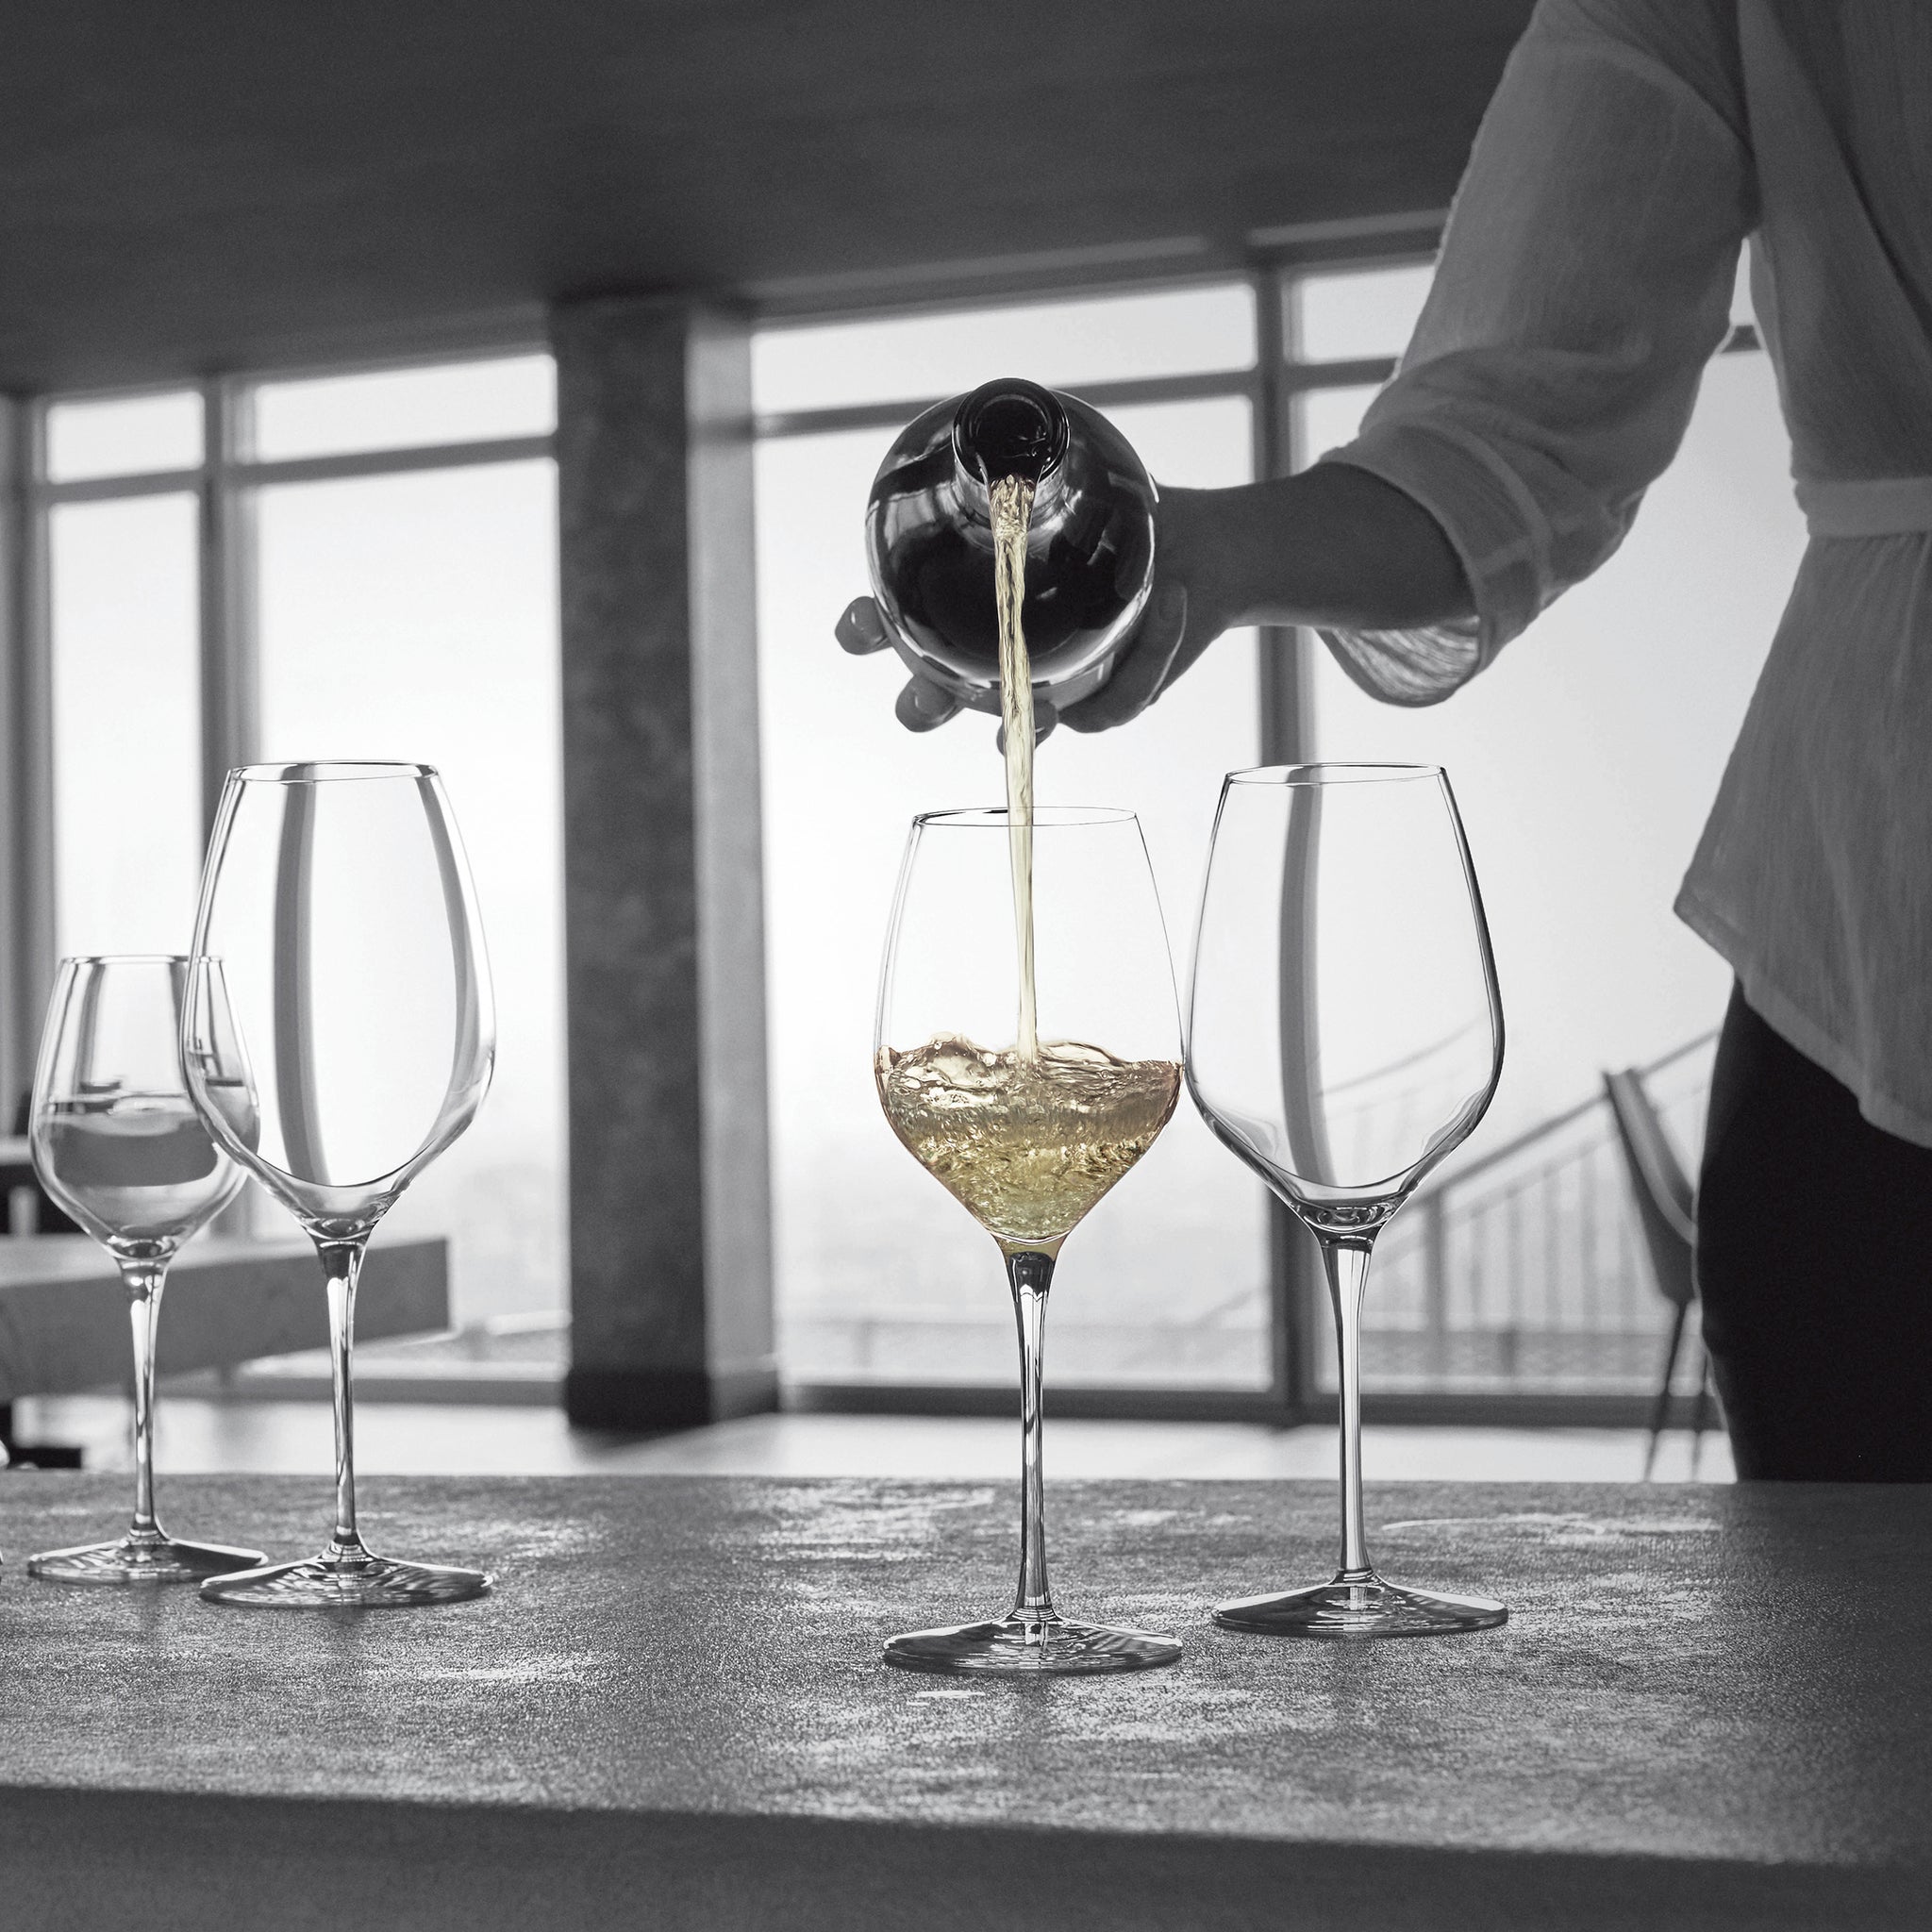 InAlto Tre Sensi 14.5 oz. Medium Wine Glasses (Set of 6)